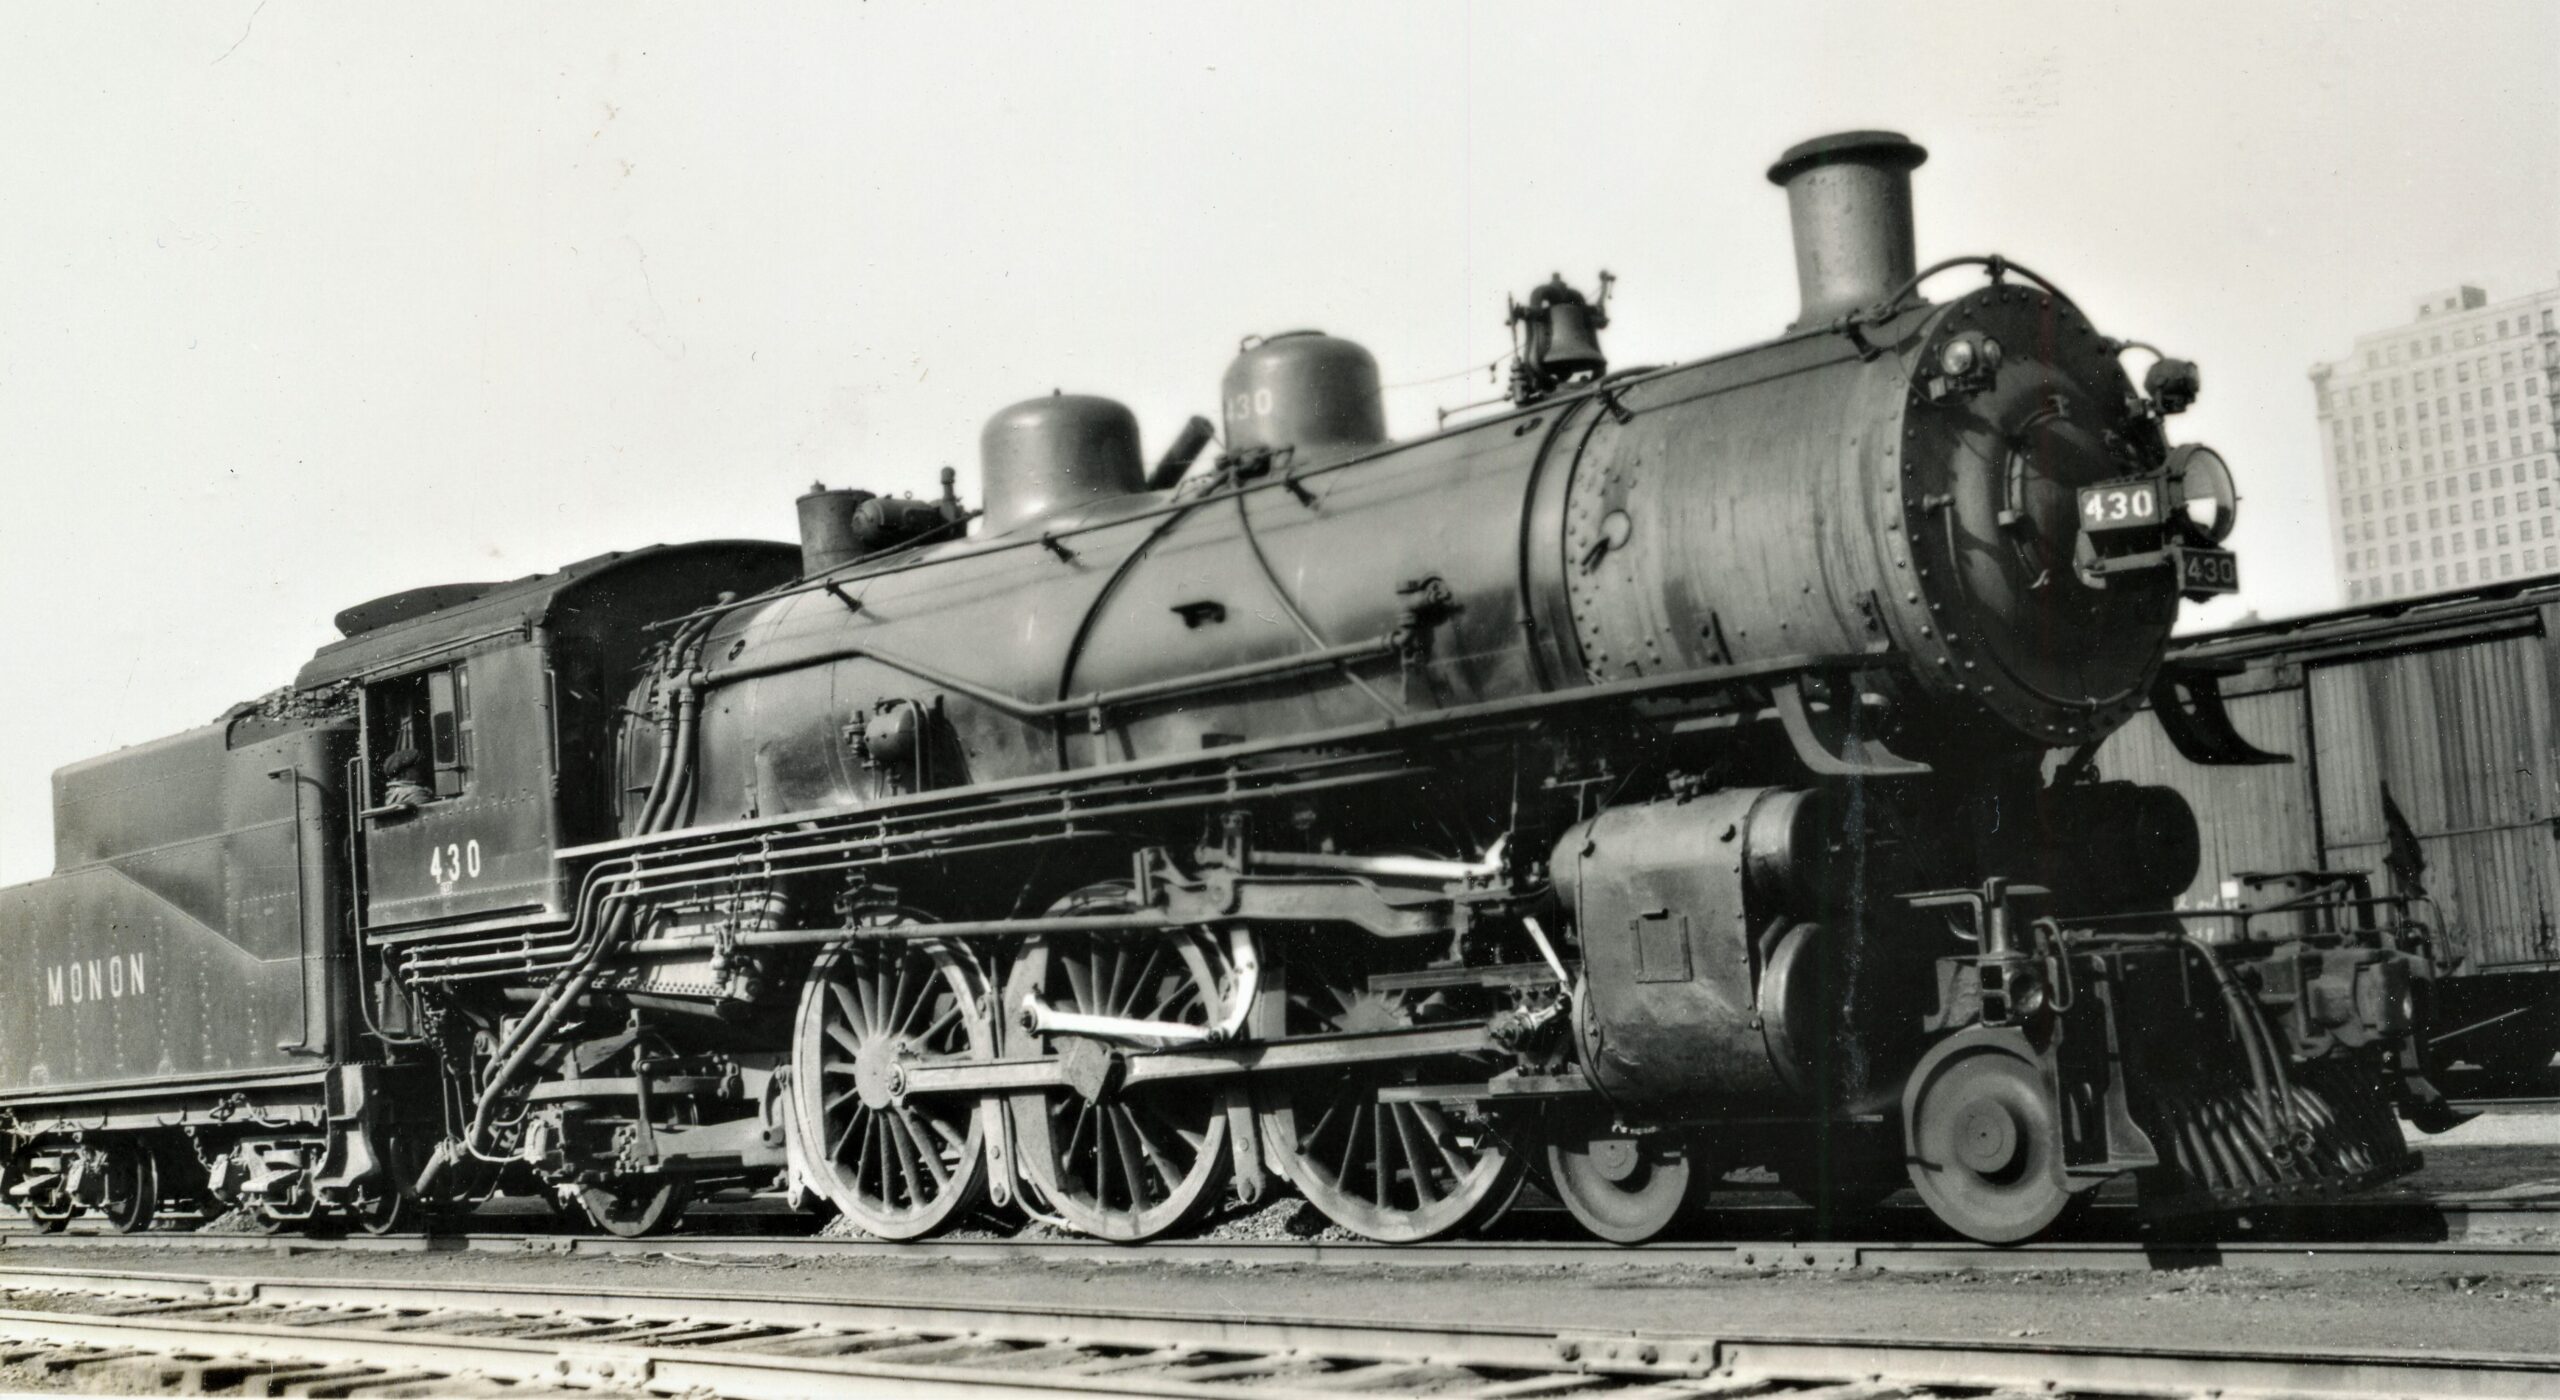 Monon | Chicago Indianapolis and Louisville Railroad | Chicago, Illinois | K4 4-6-2 #430 steam locomotive | May 17, 1939 | Elmer Kremkow collection